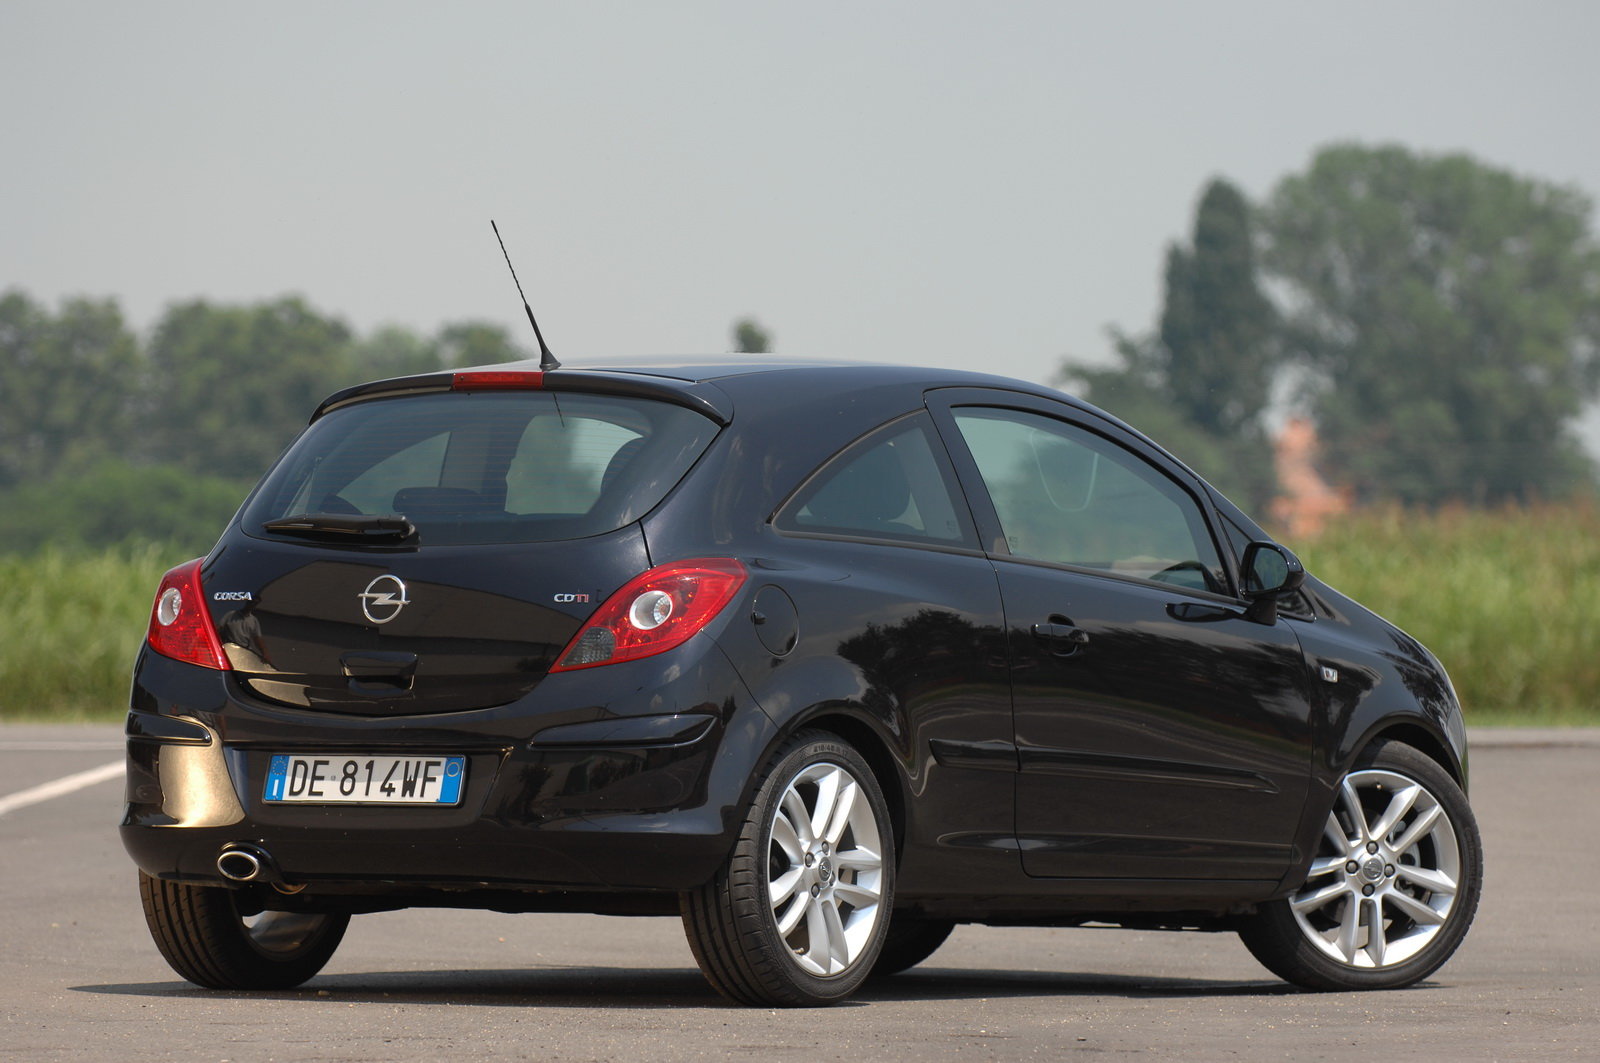 Opel corsa 2008 год. Opel Corsa 3. Опель Корса купе 2008. Opel Corsa d 2007 купе. Opel Corsa 2008 черная.